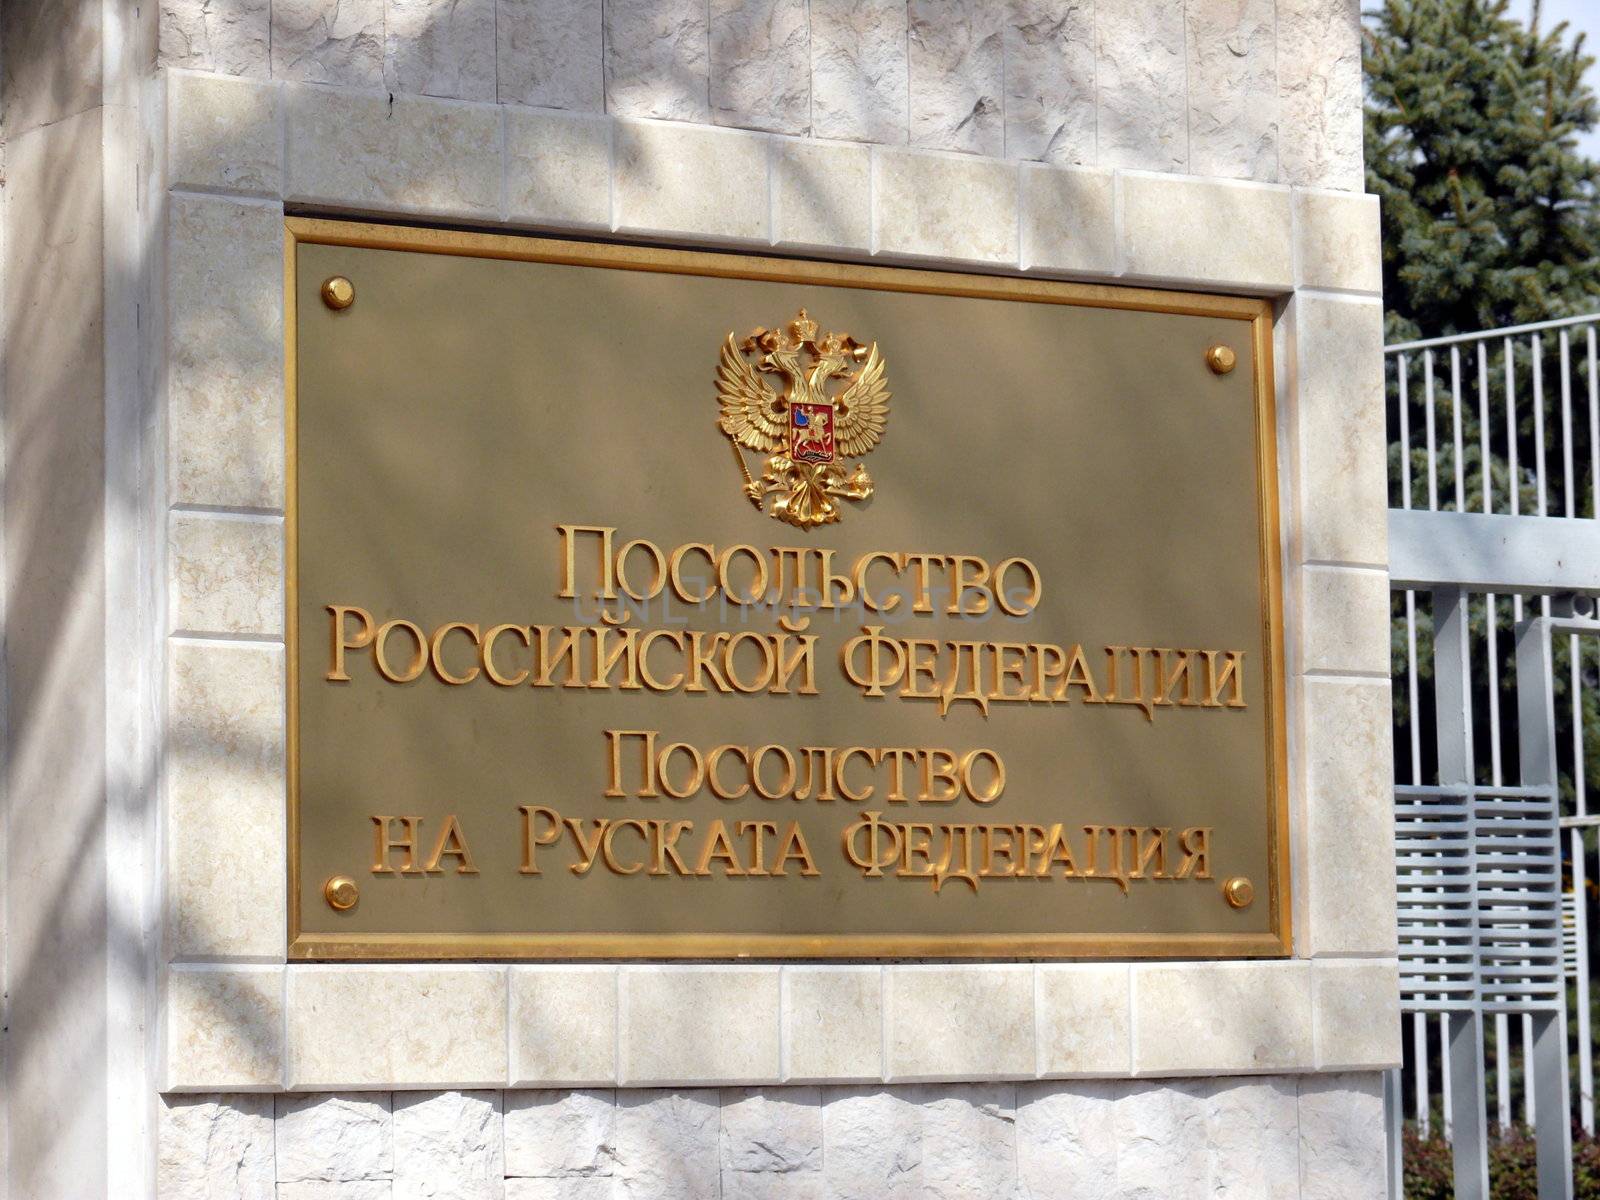 Embassy of Russian Federation in Sofia, Bulgaria by Stoyanov